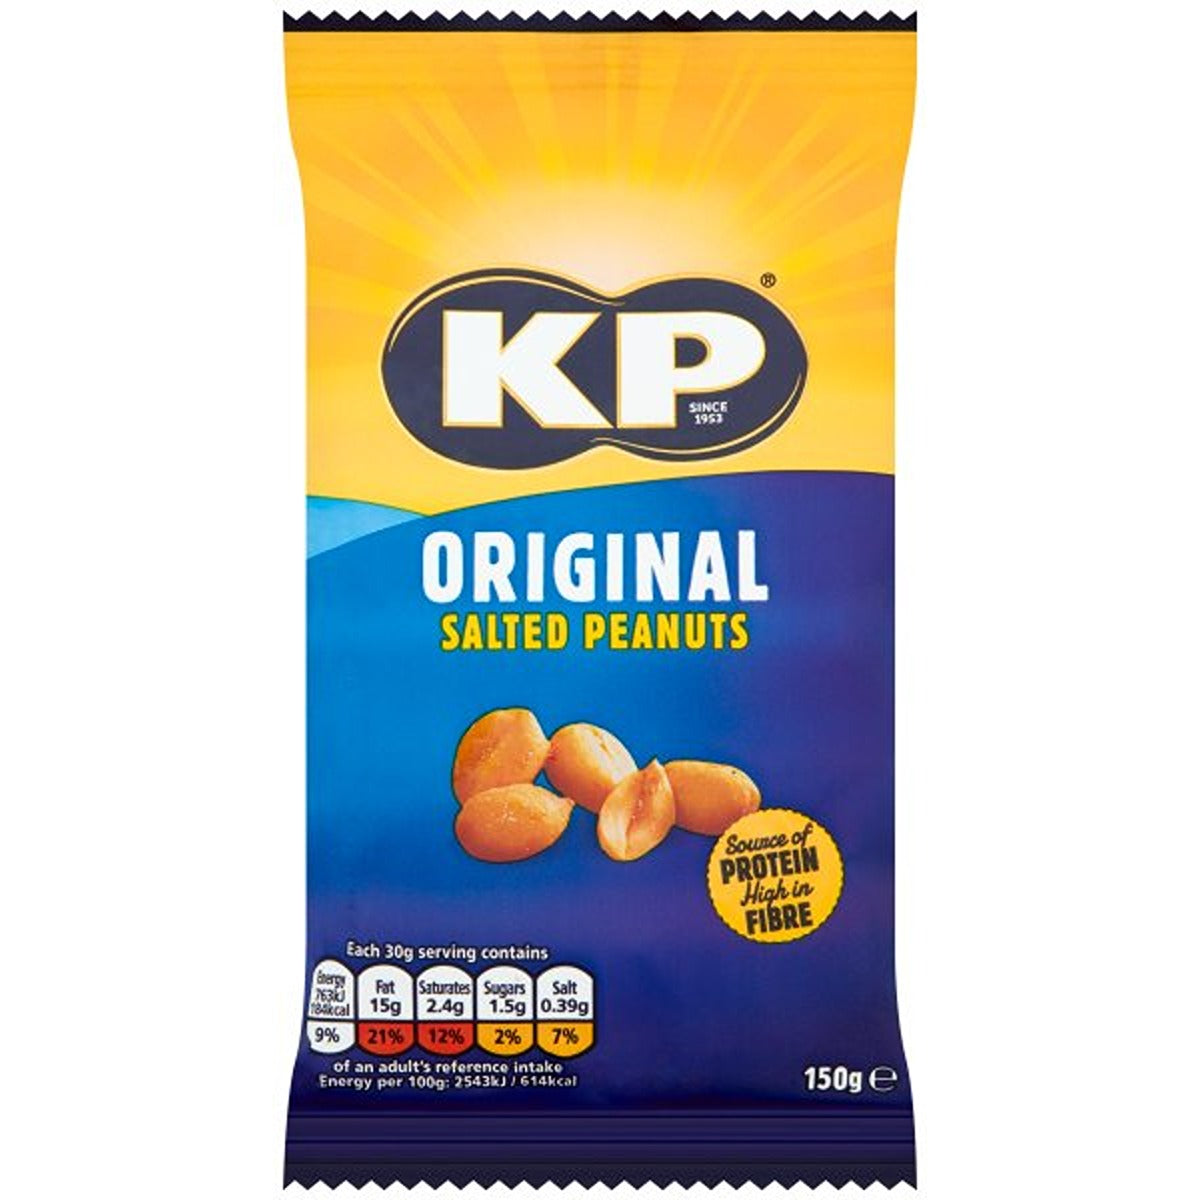 KP - Original Salted Peanuts - 150g